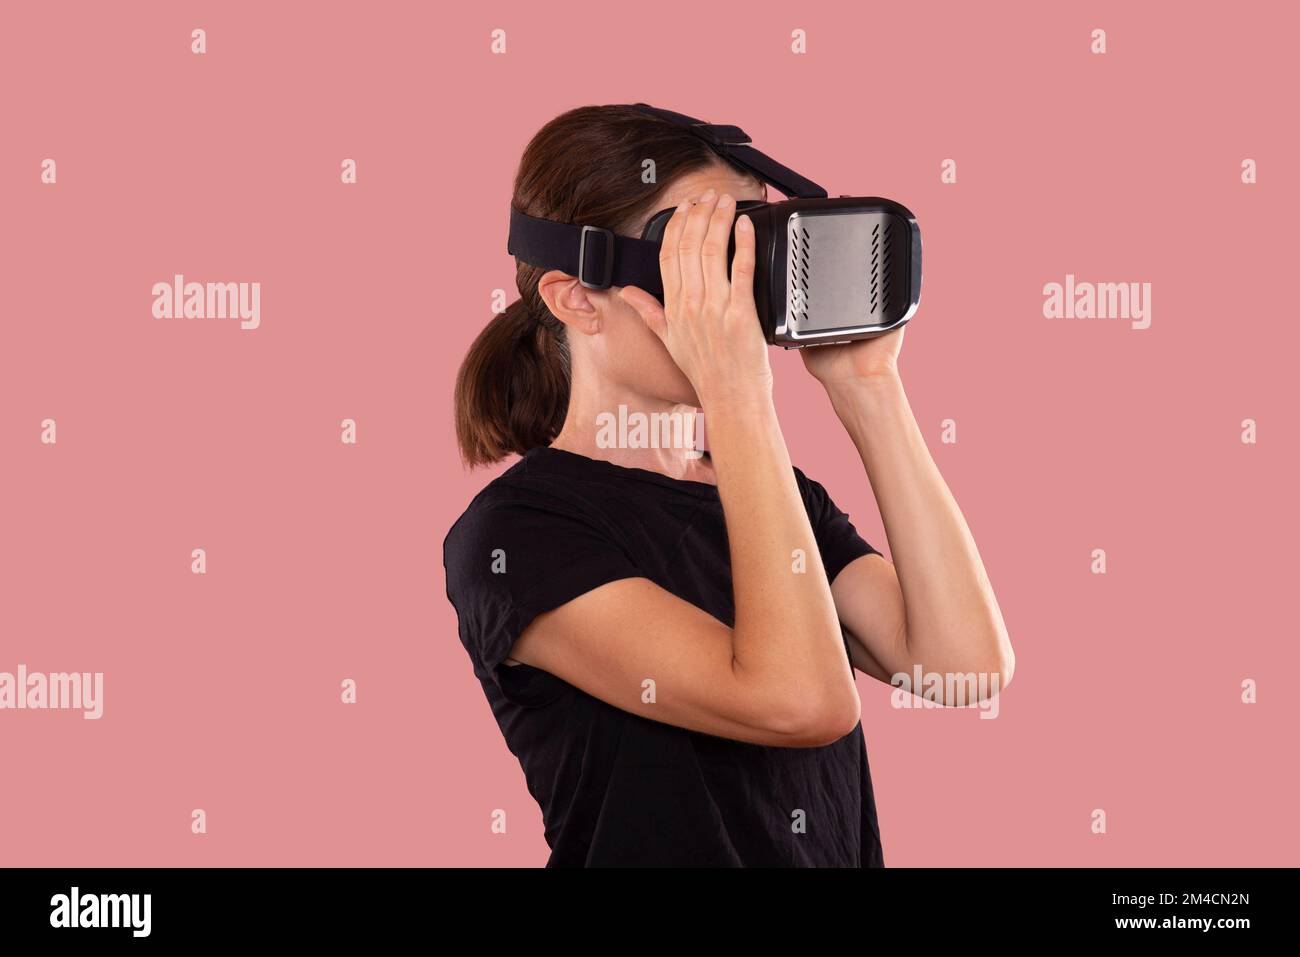 Woman wearing a virtual reality headset, pink background. Stock Photo